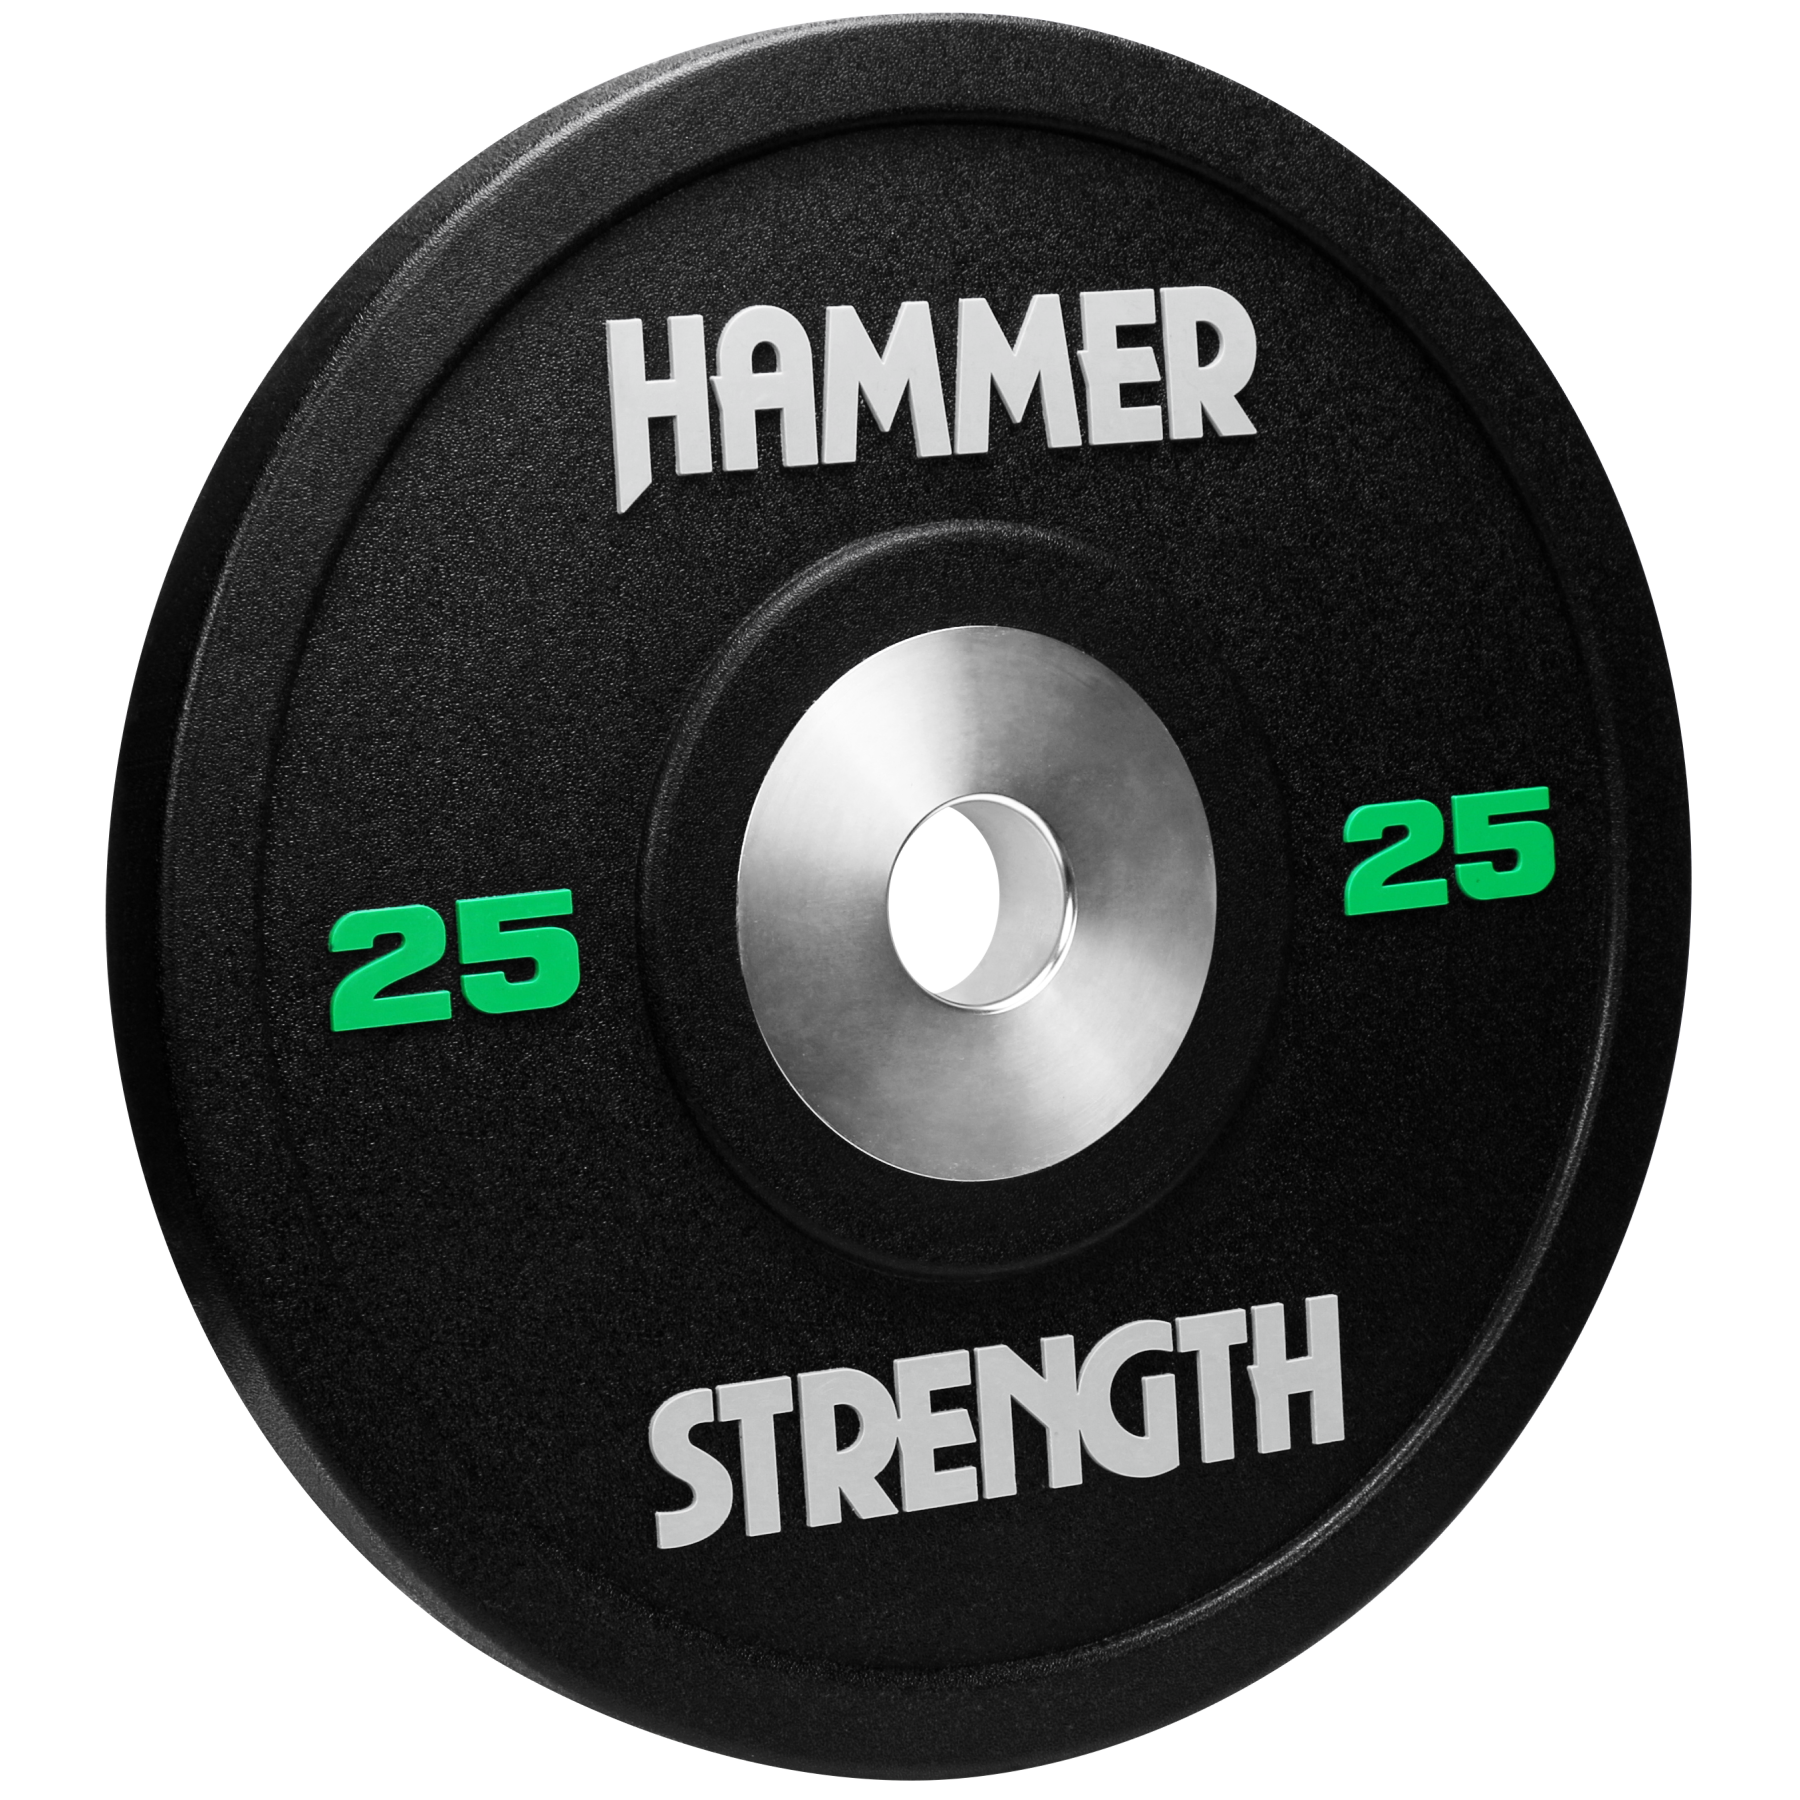 Hammer Strength Urethane Black Bumpers - 25 lbs.